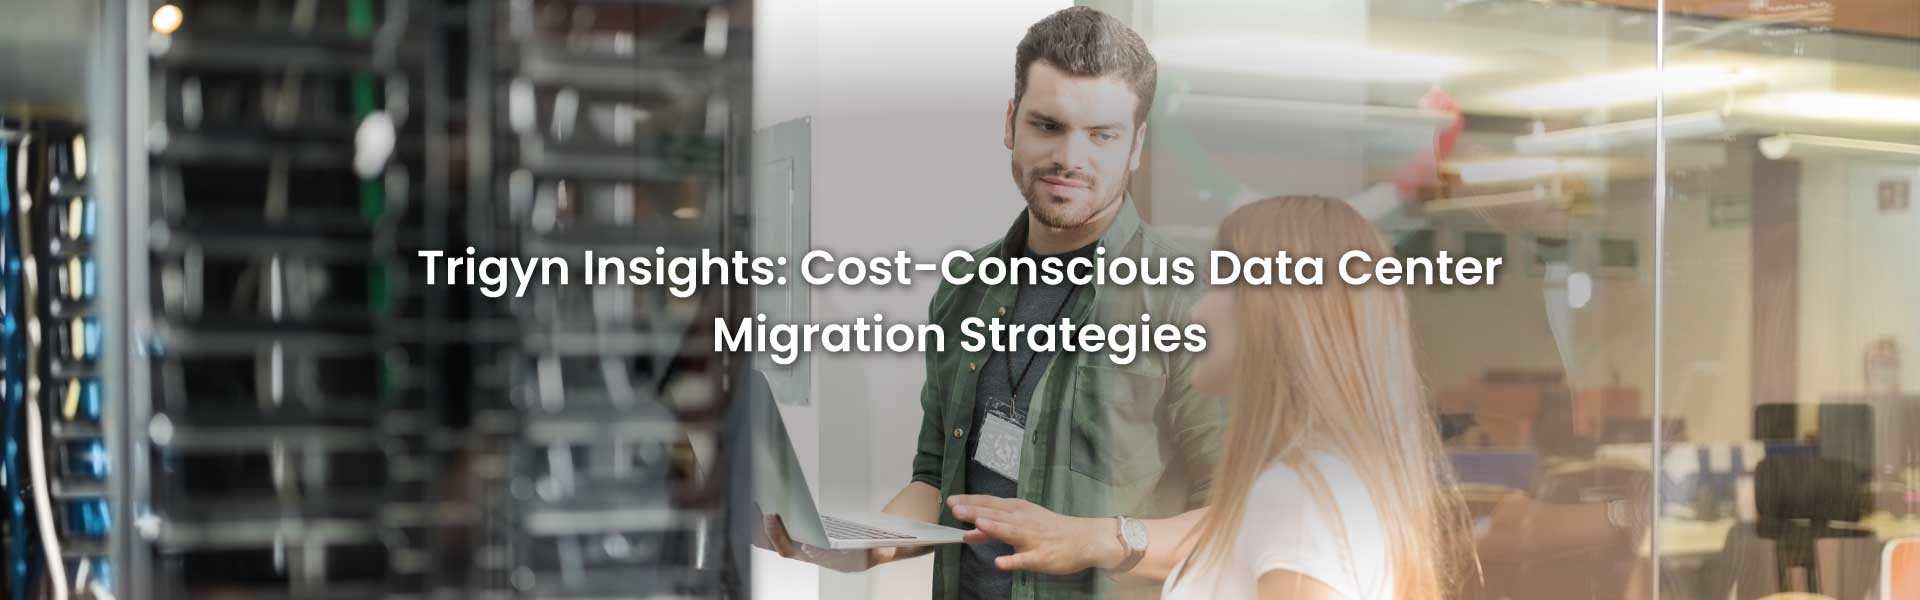 Data Center Migration Strategies